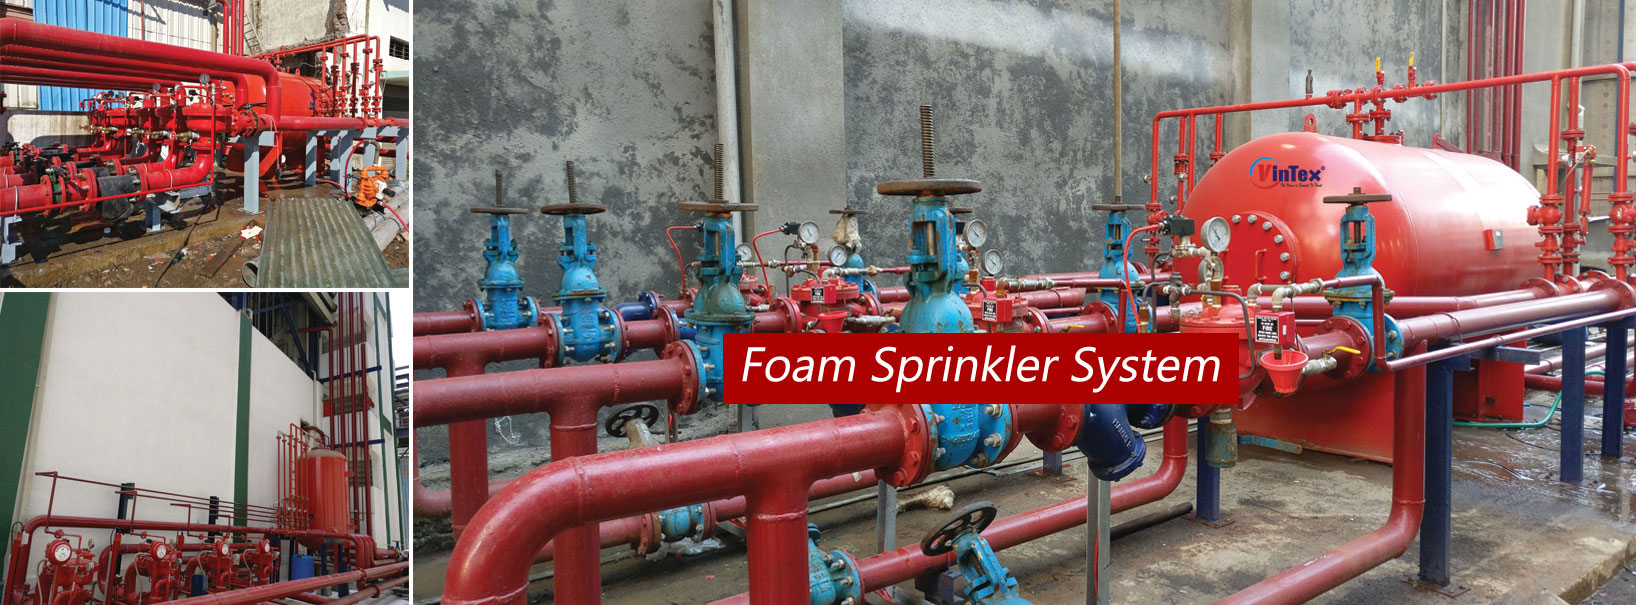 Foam Sprinkler System